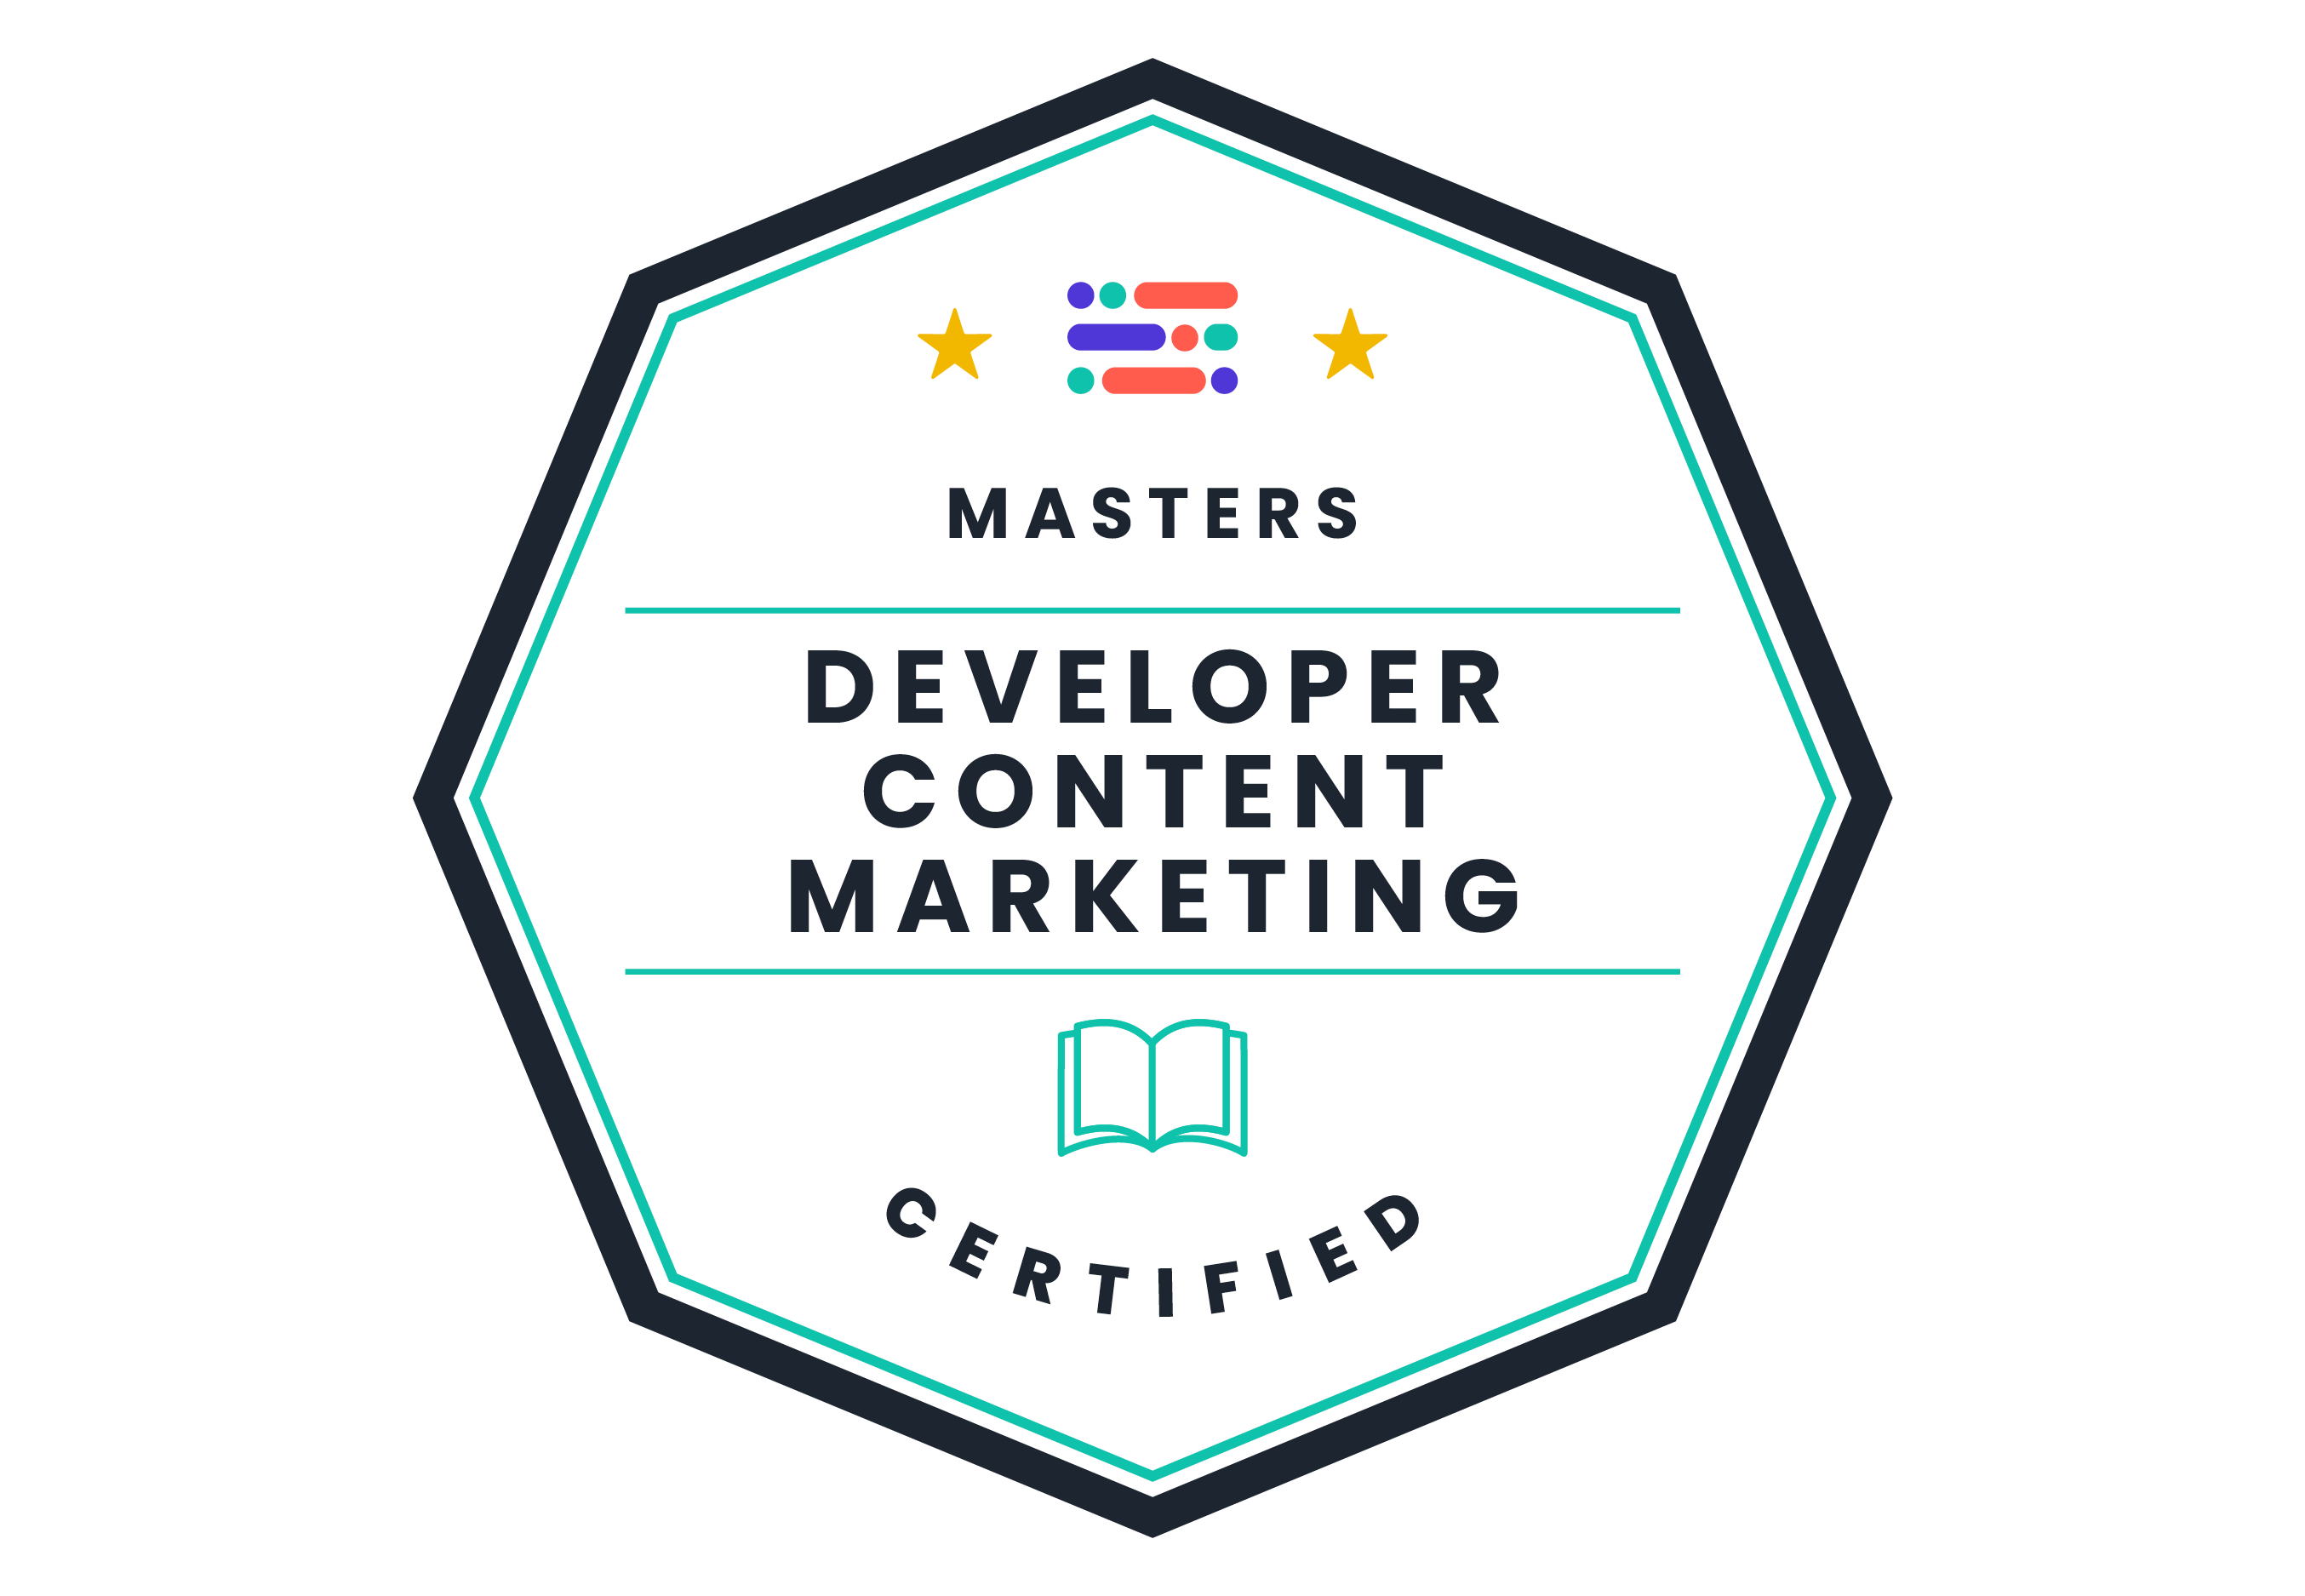 Developer Content Marketing Certified | Masters badge